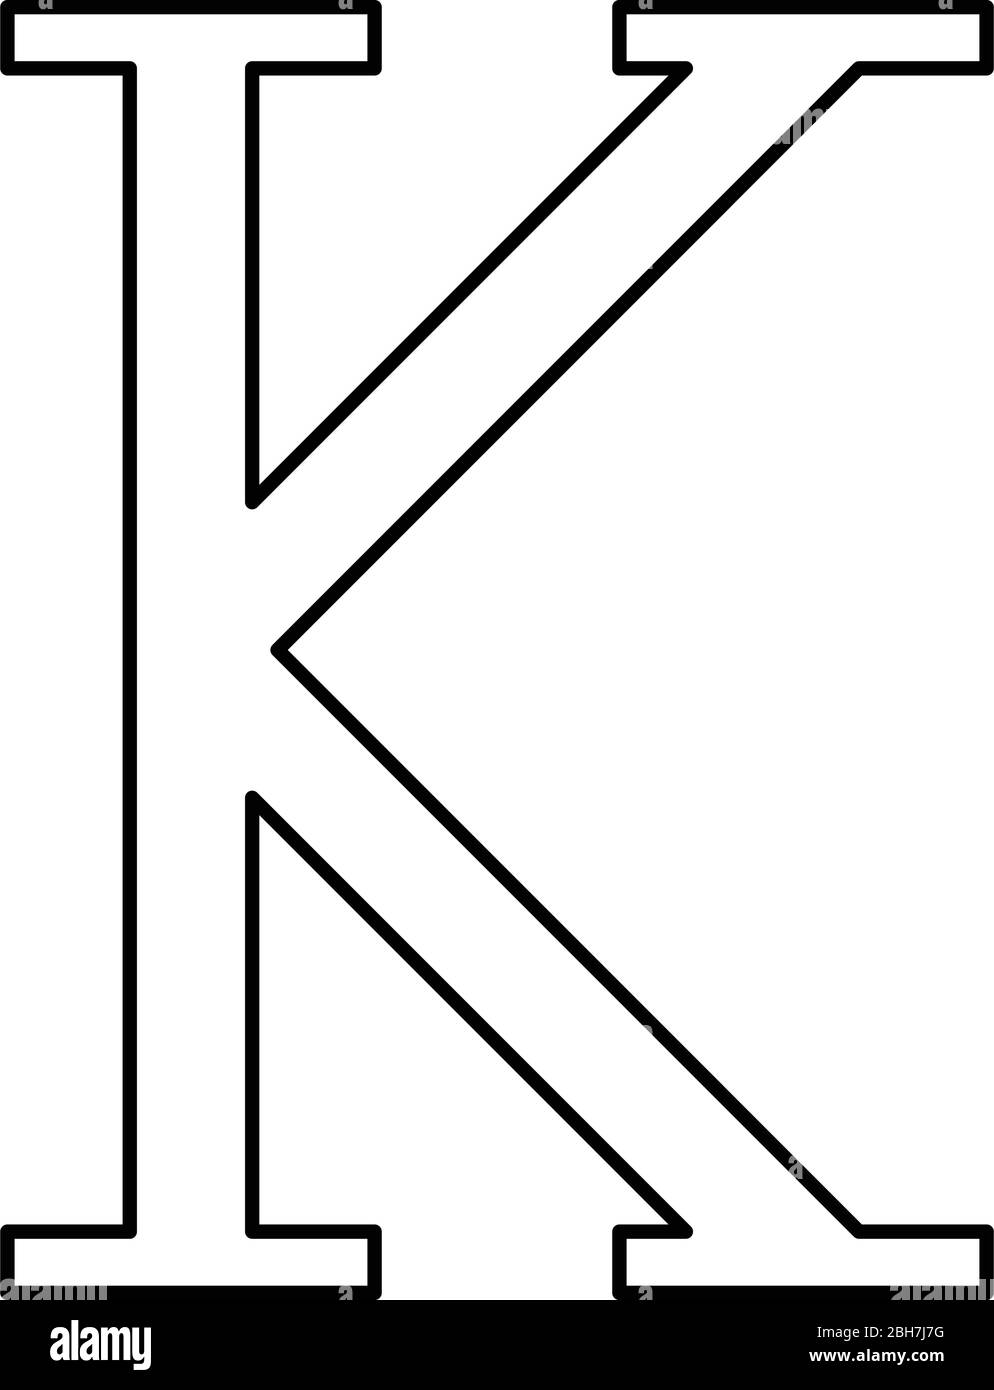 Kappa greek symbol capital letter uppercase font icon outline black color  vector illustration flat style simple image Stock Vector Image & Art - Alamy